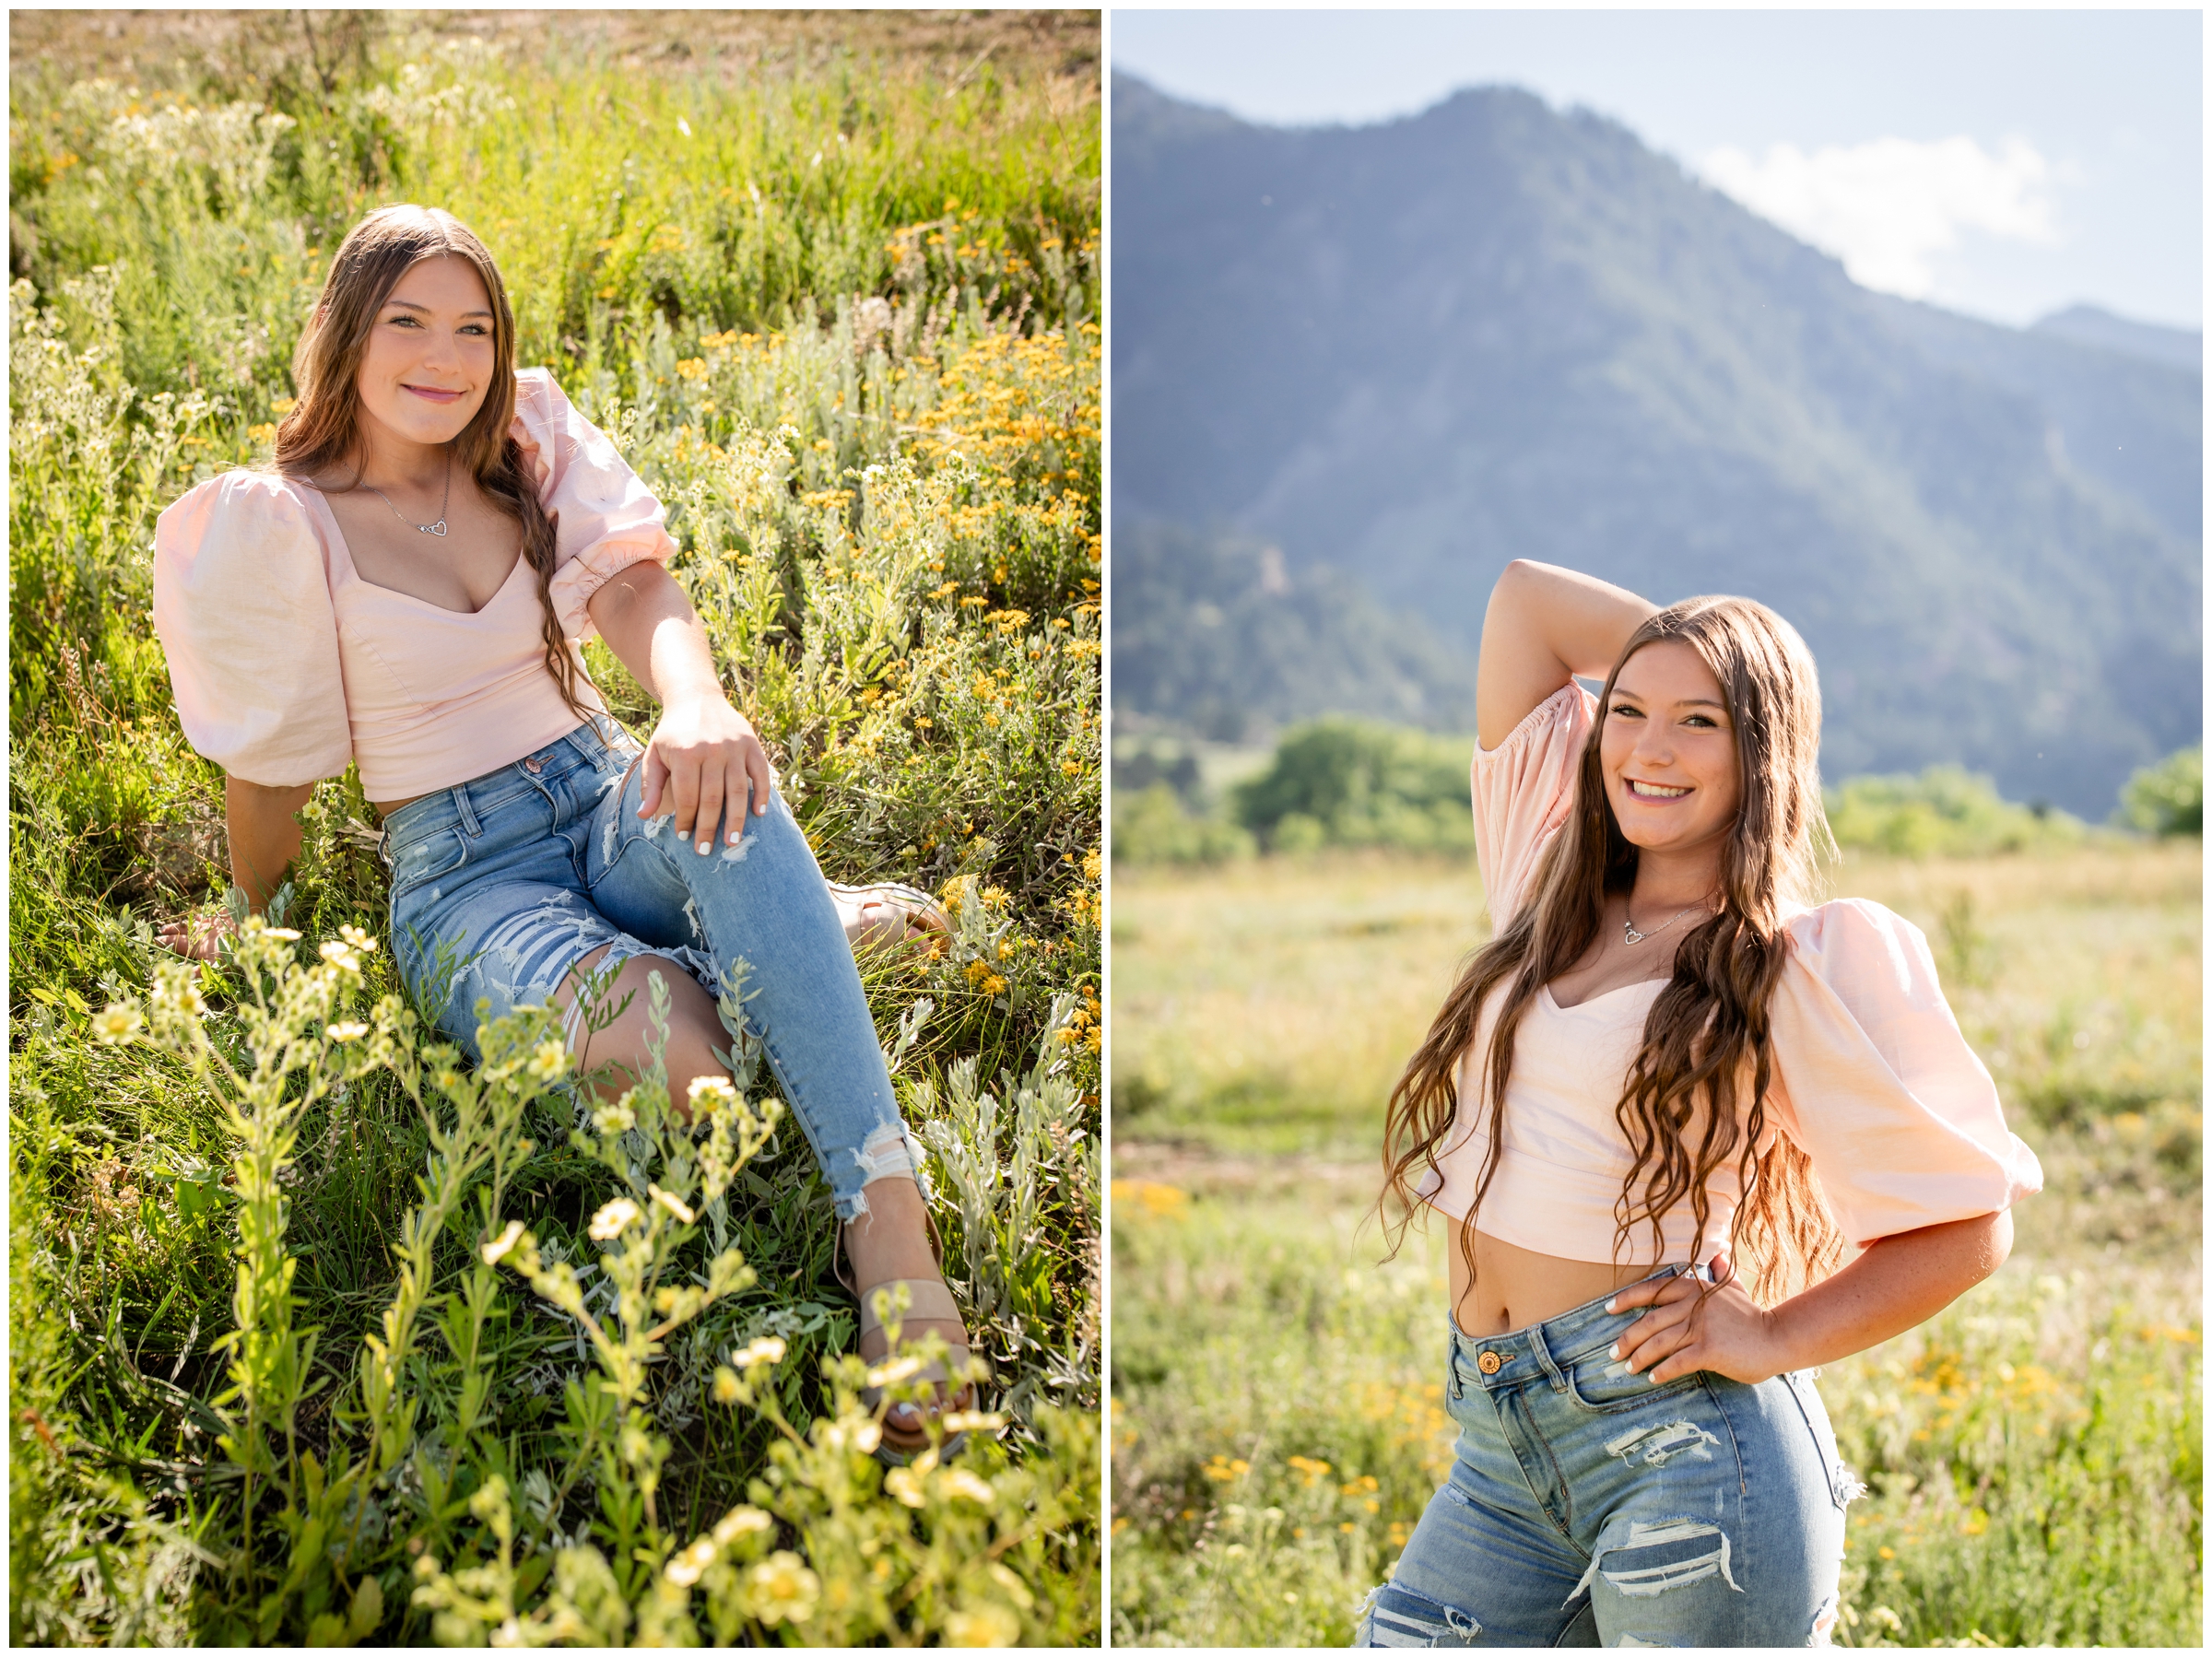 Colorado mountain graduation photography session at South Mesa Trail